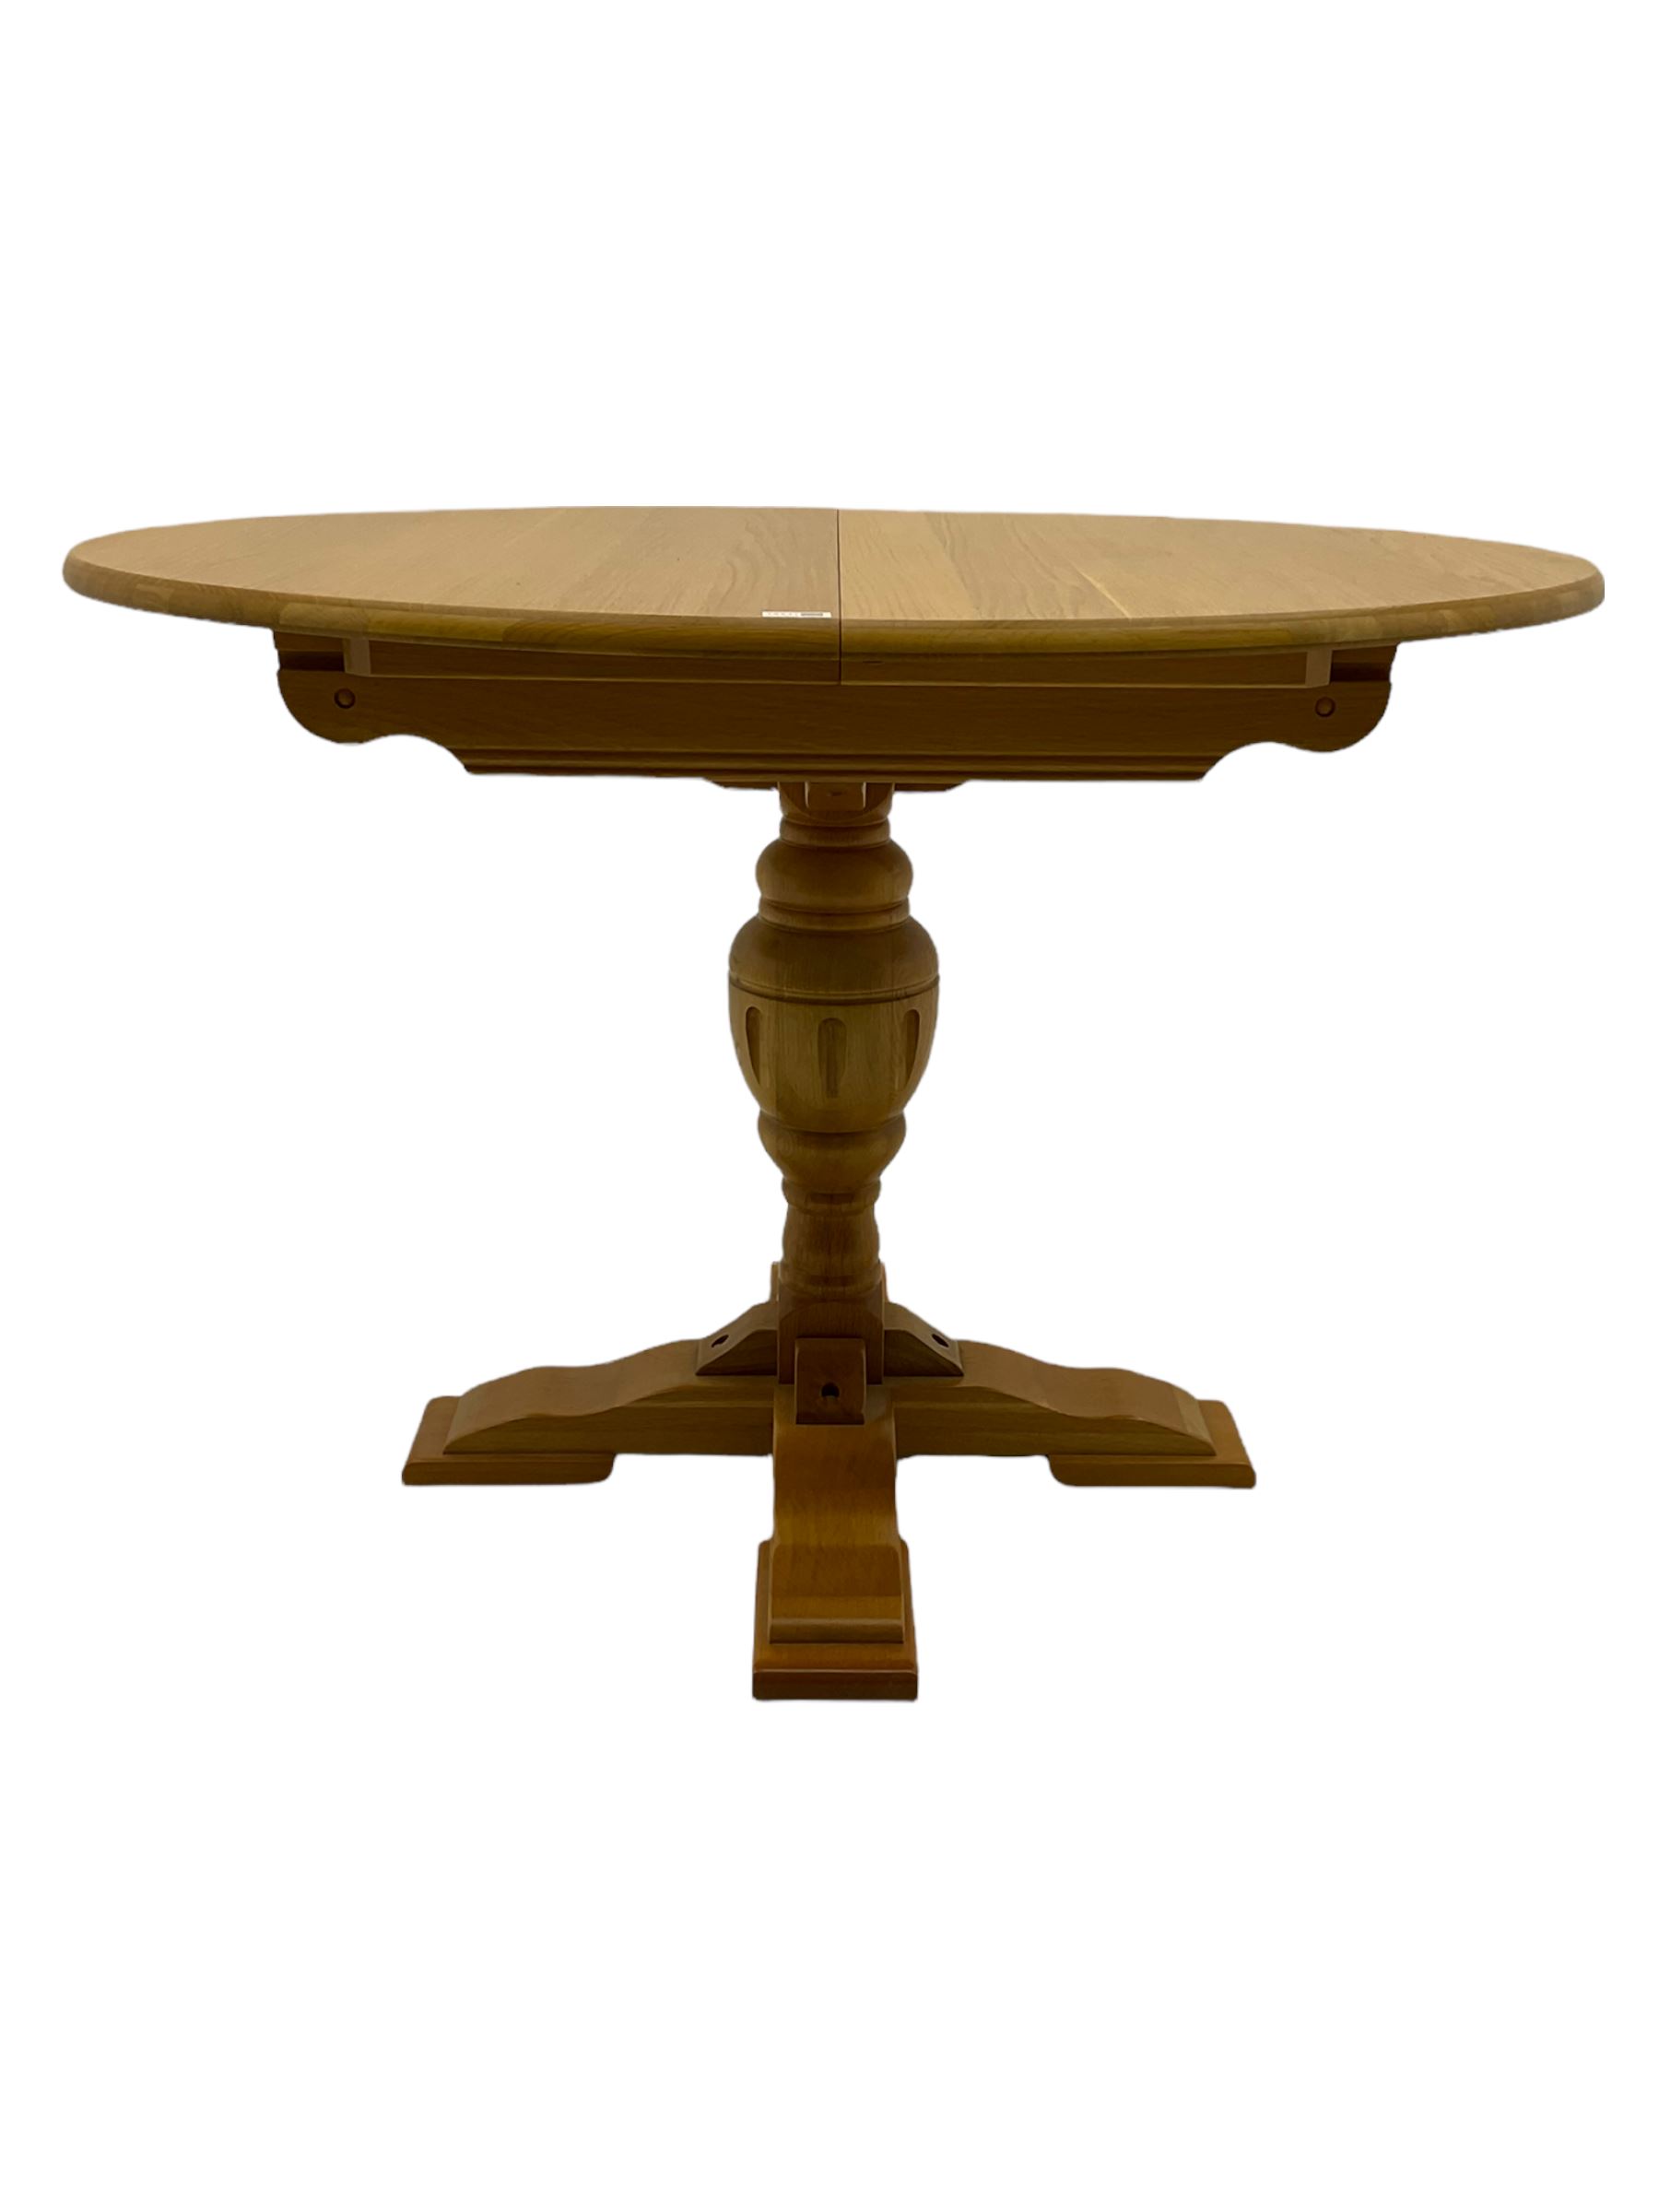 Light oak oval extending dining table - Image 2 of 5